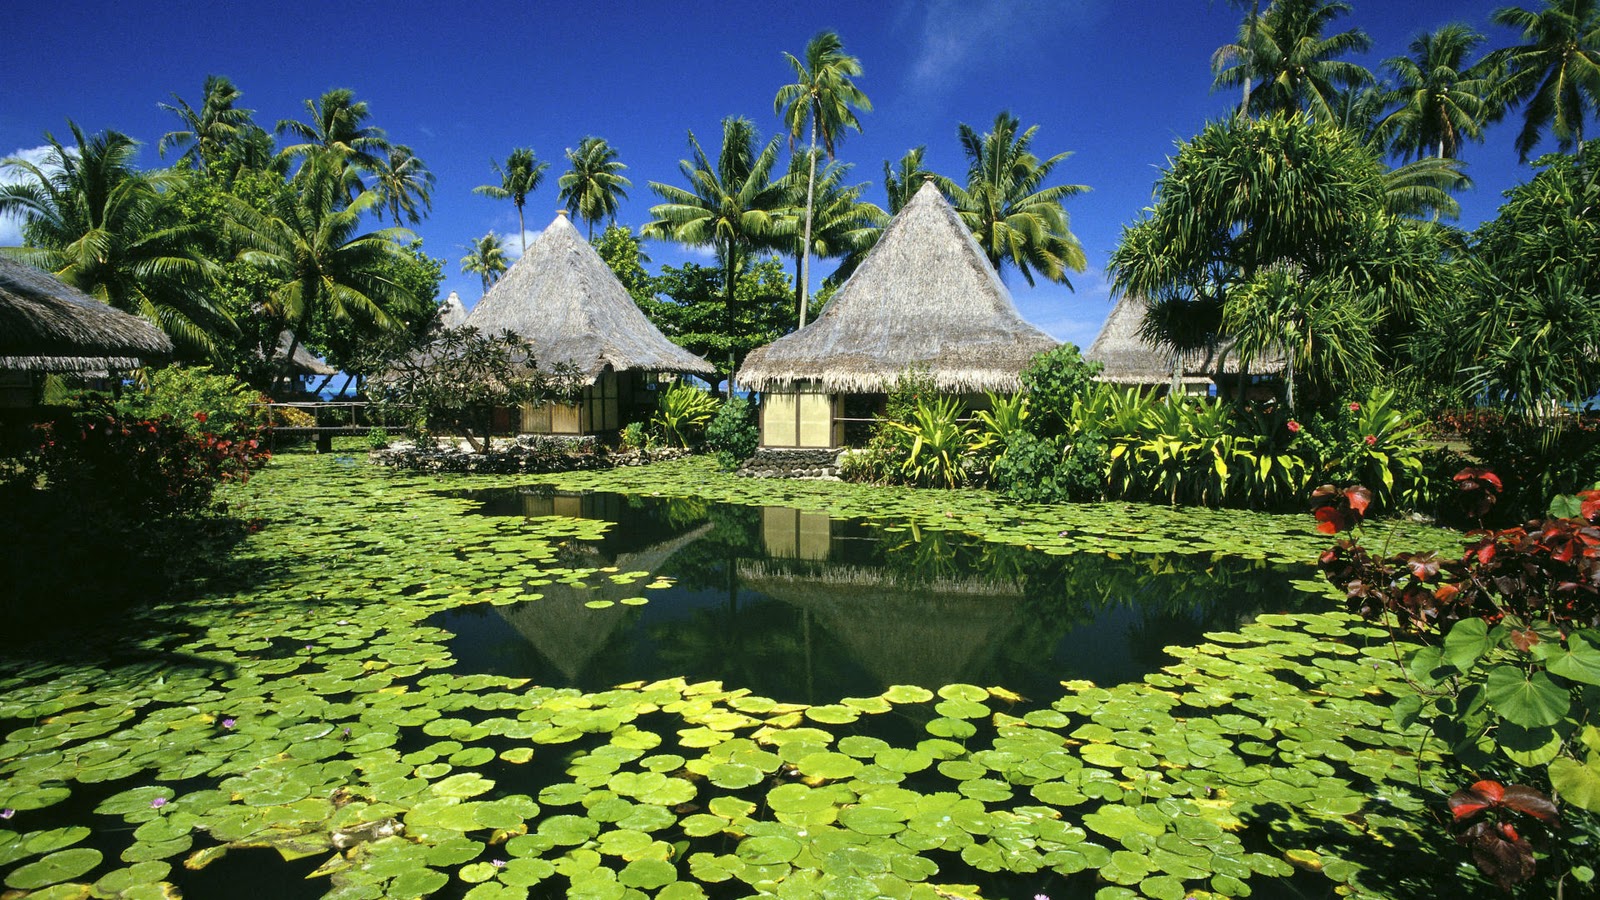 http://1.bp.blogspot.com/--Vwfb0qRiY8/TrwZZrd6TzI/AAAAAAAAEec/vUlRoHTM02E/s1600/French+Polynesia+Tahiti+Island+Wallpapers7.jpg